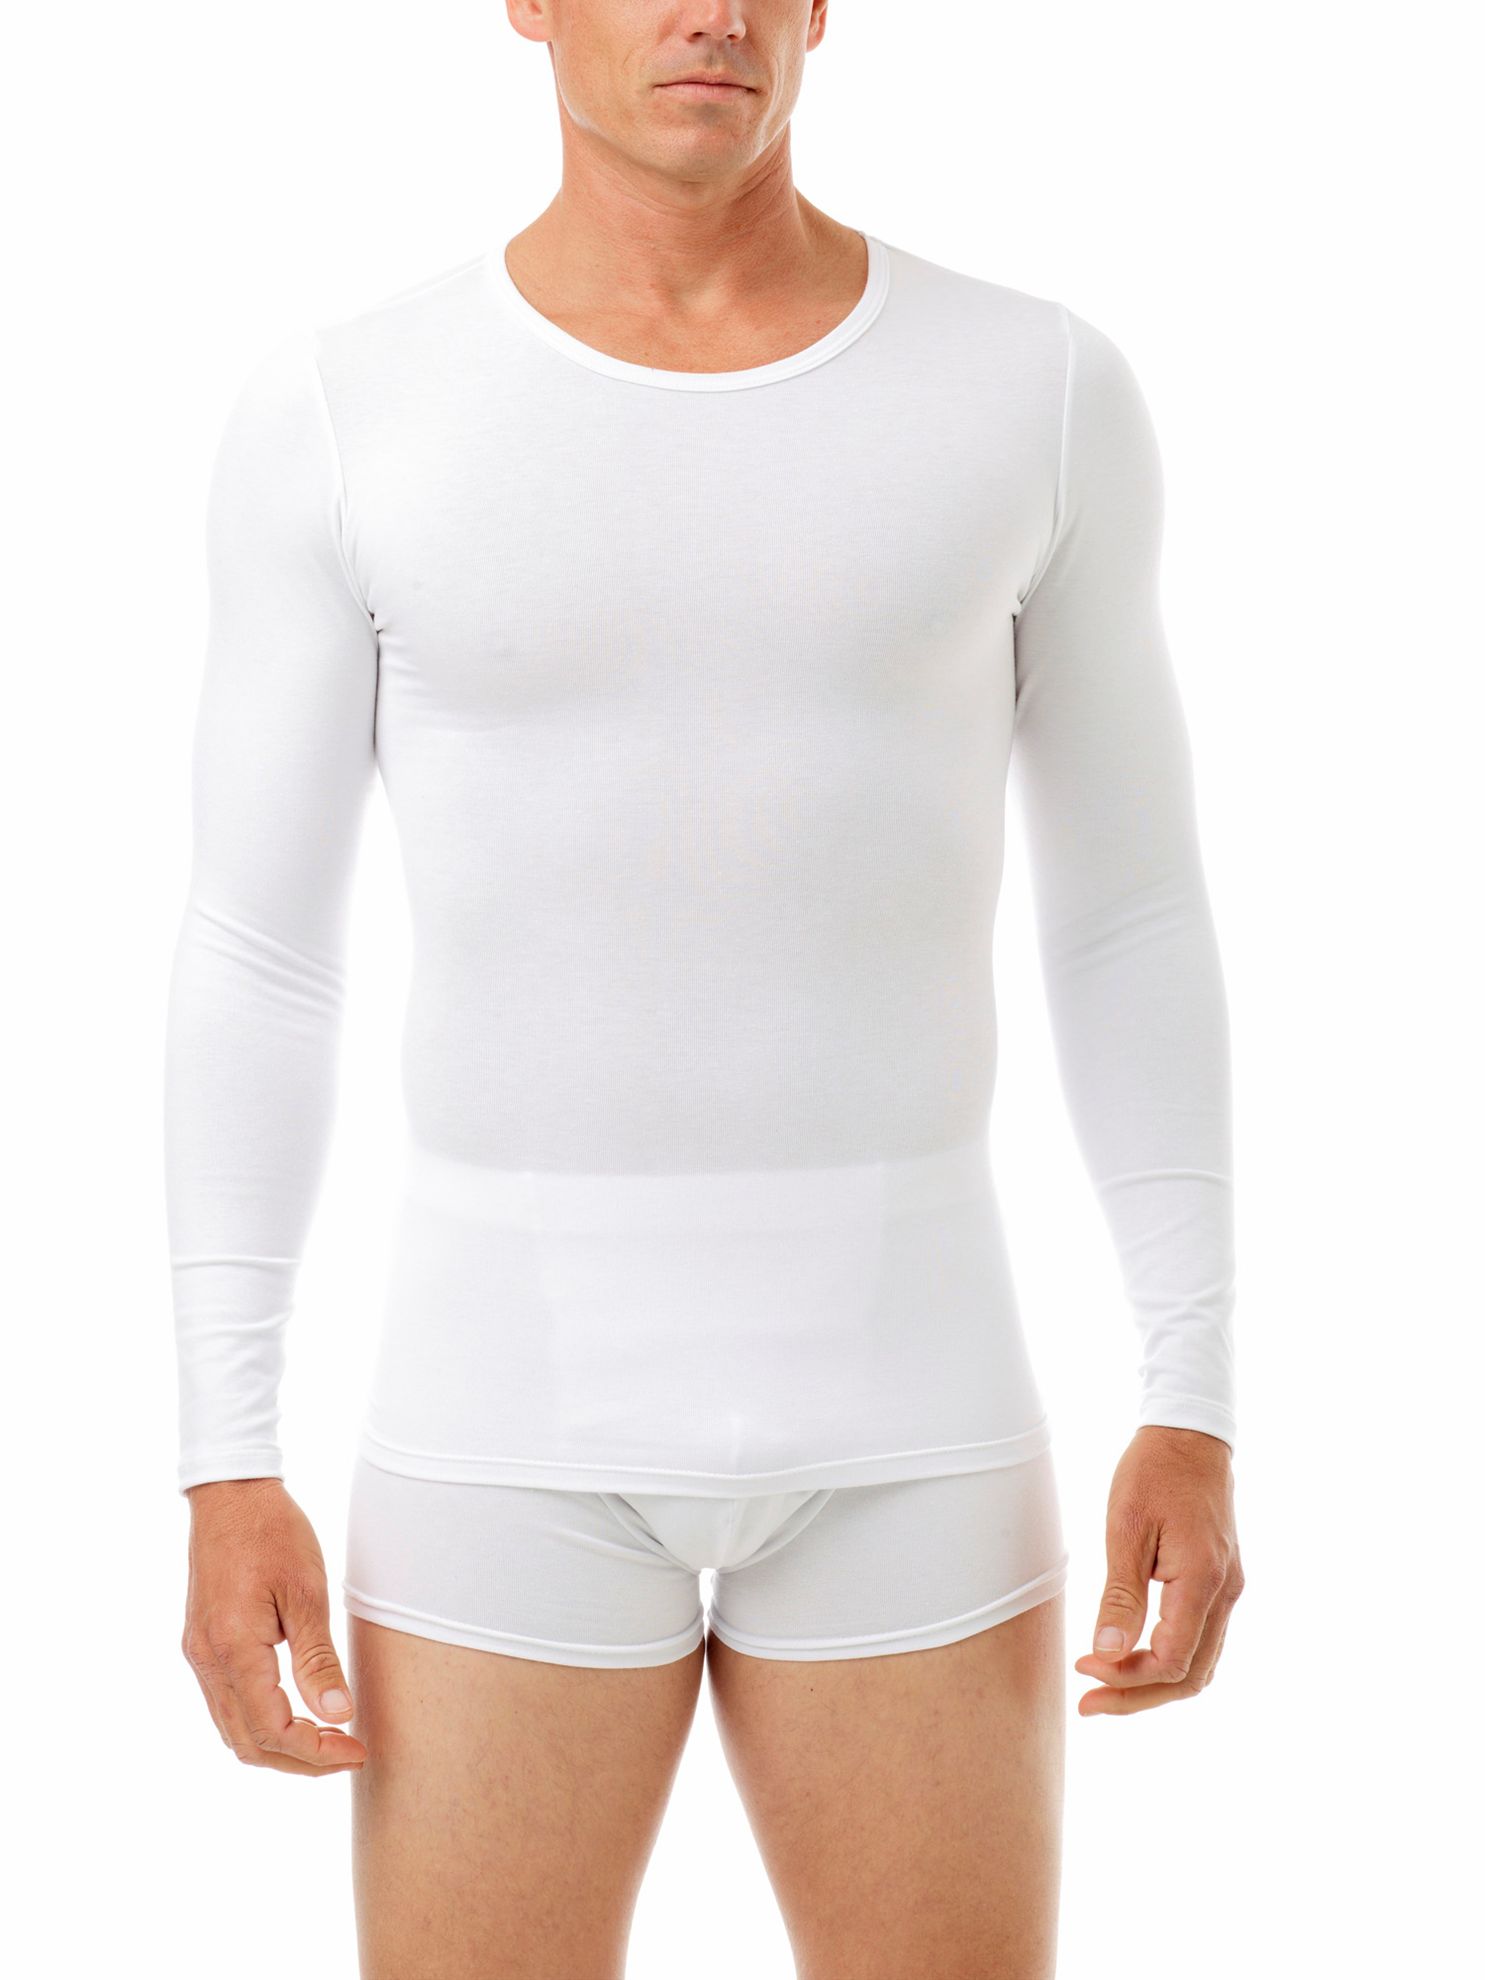 Underworks Men Cotton Spandex Crew Neck Long Sleeves Shirt - White - XS